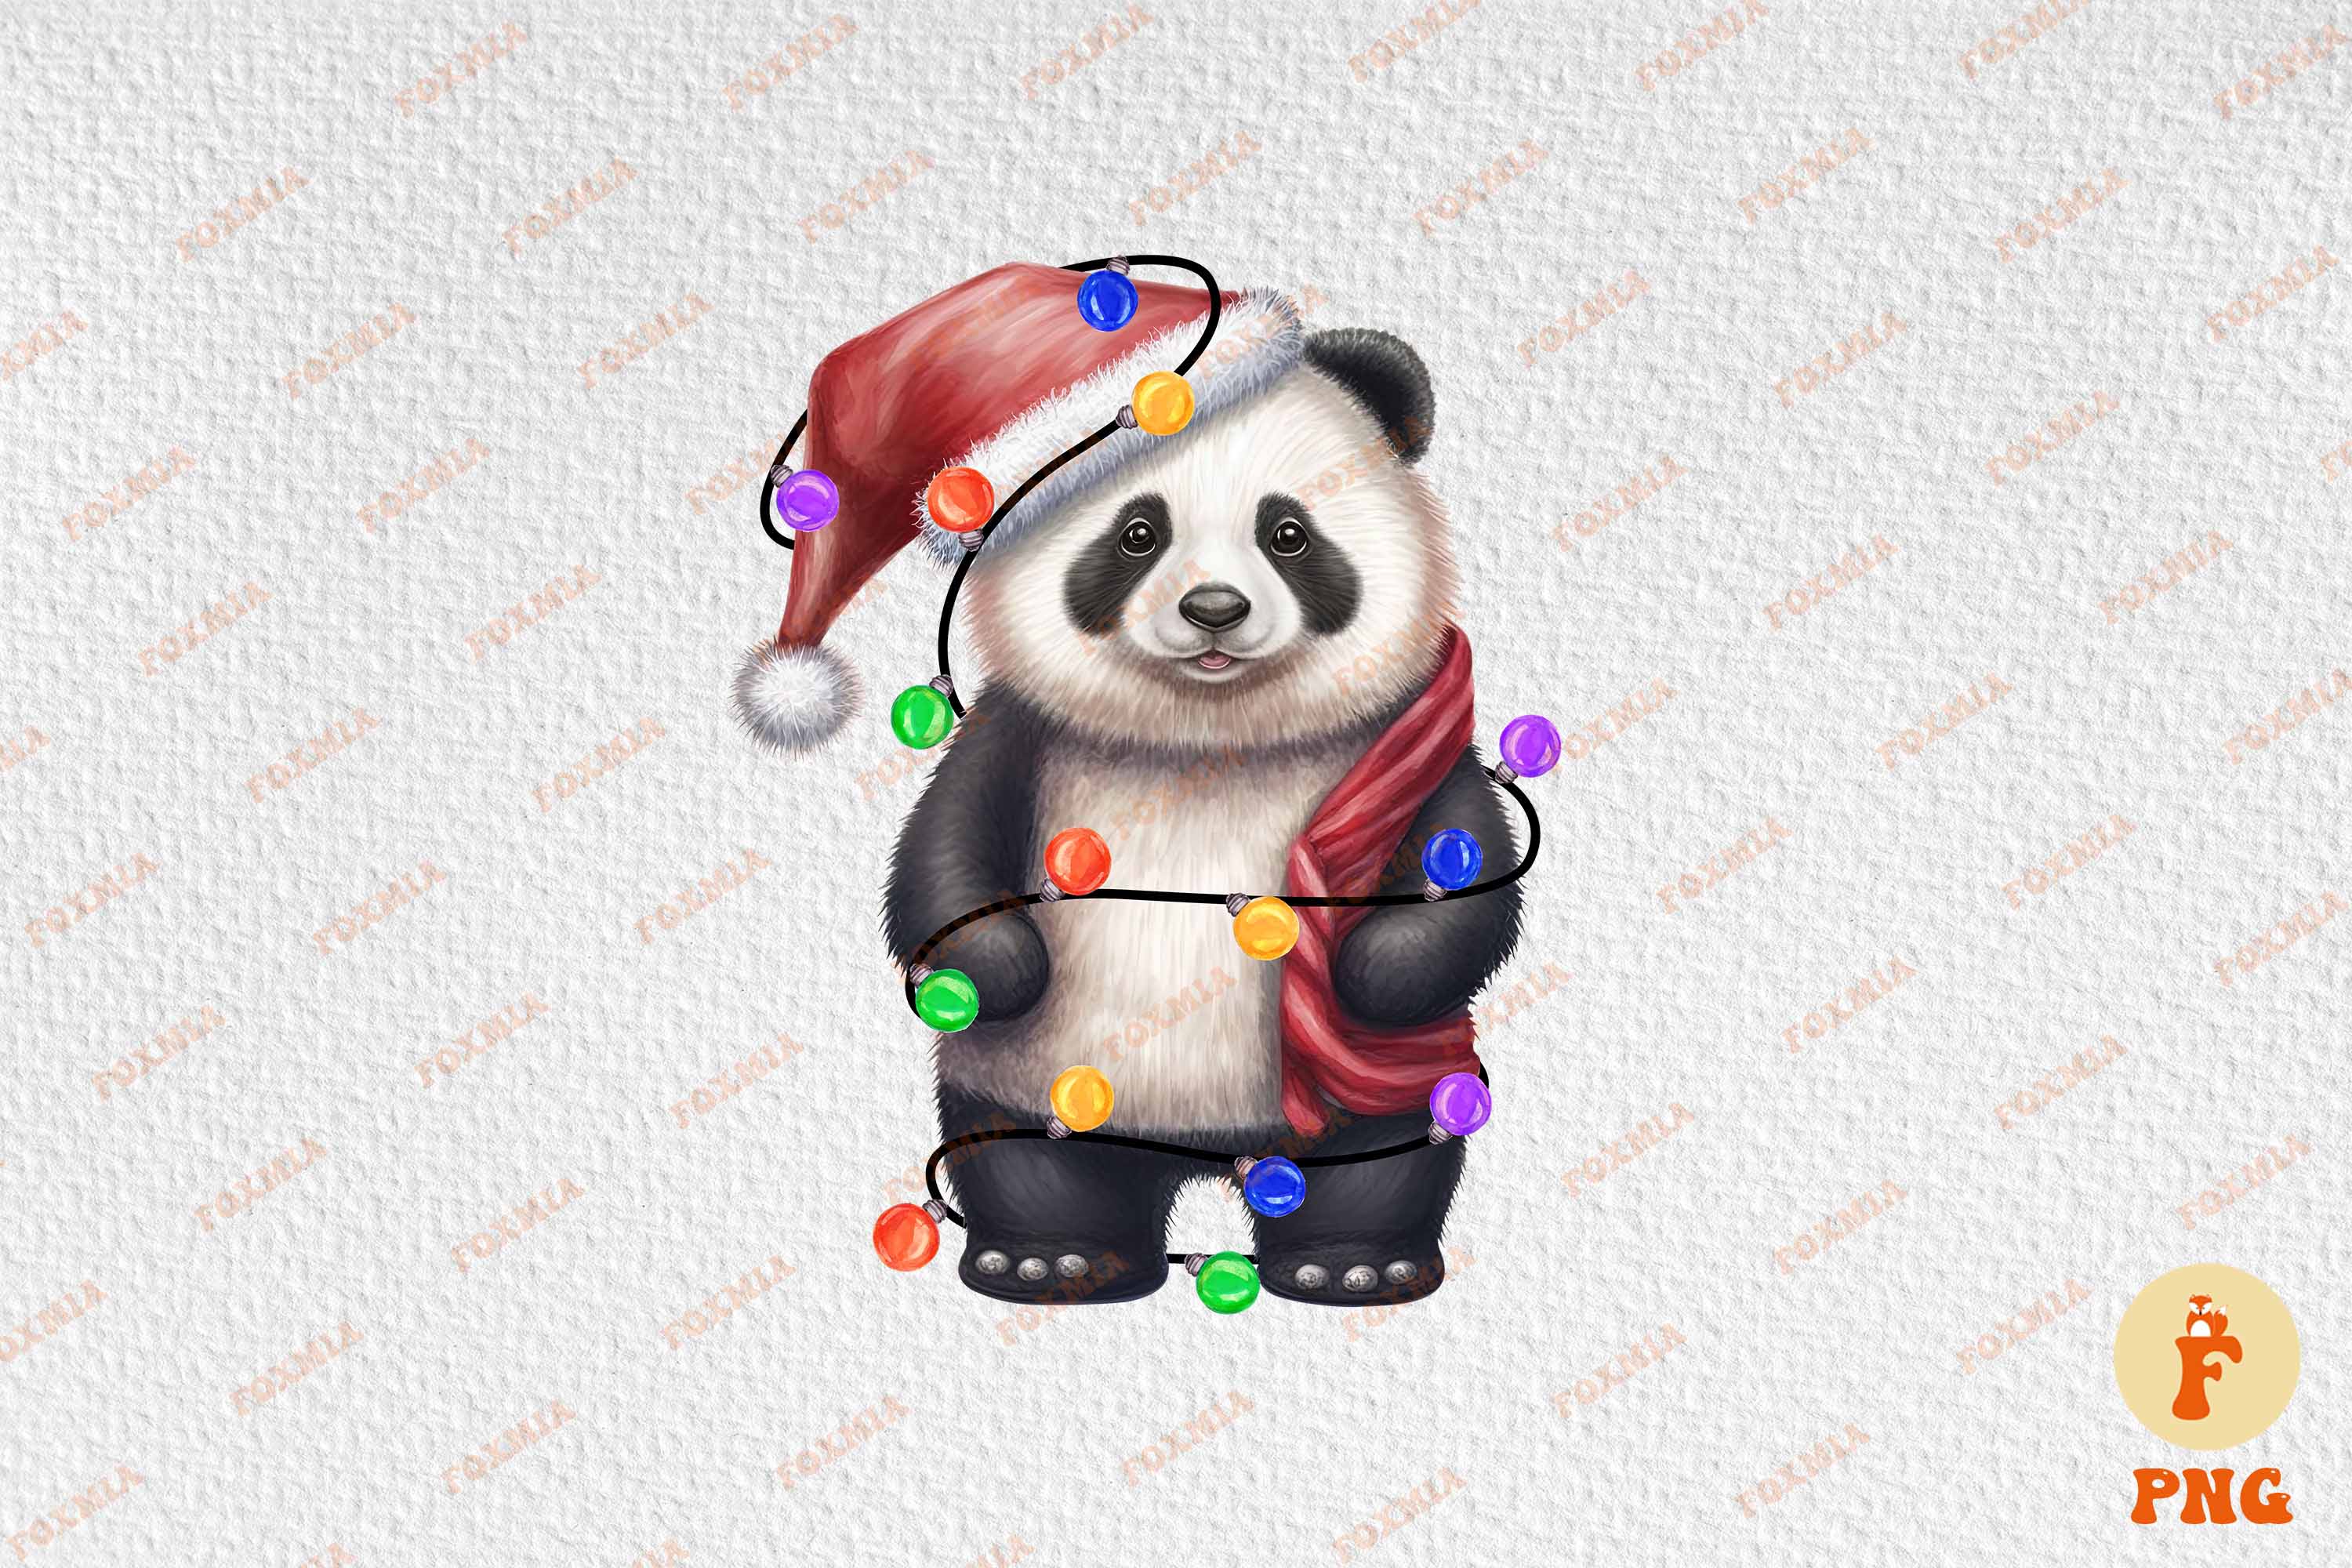 Beautiful picture of a panda wearing a santa hat.